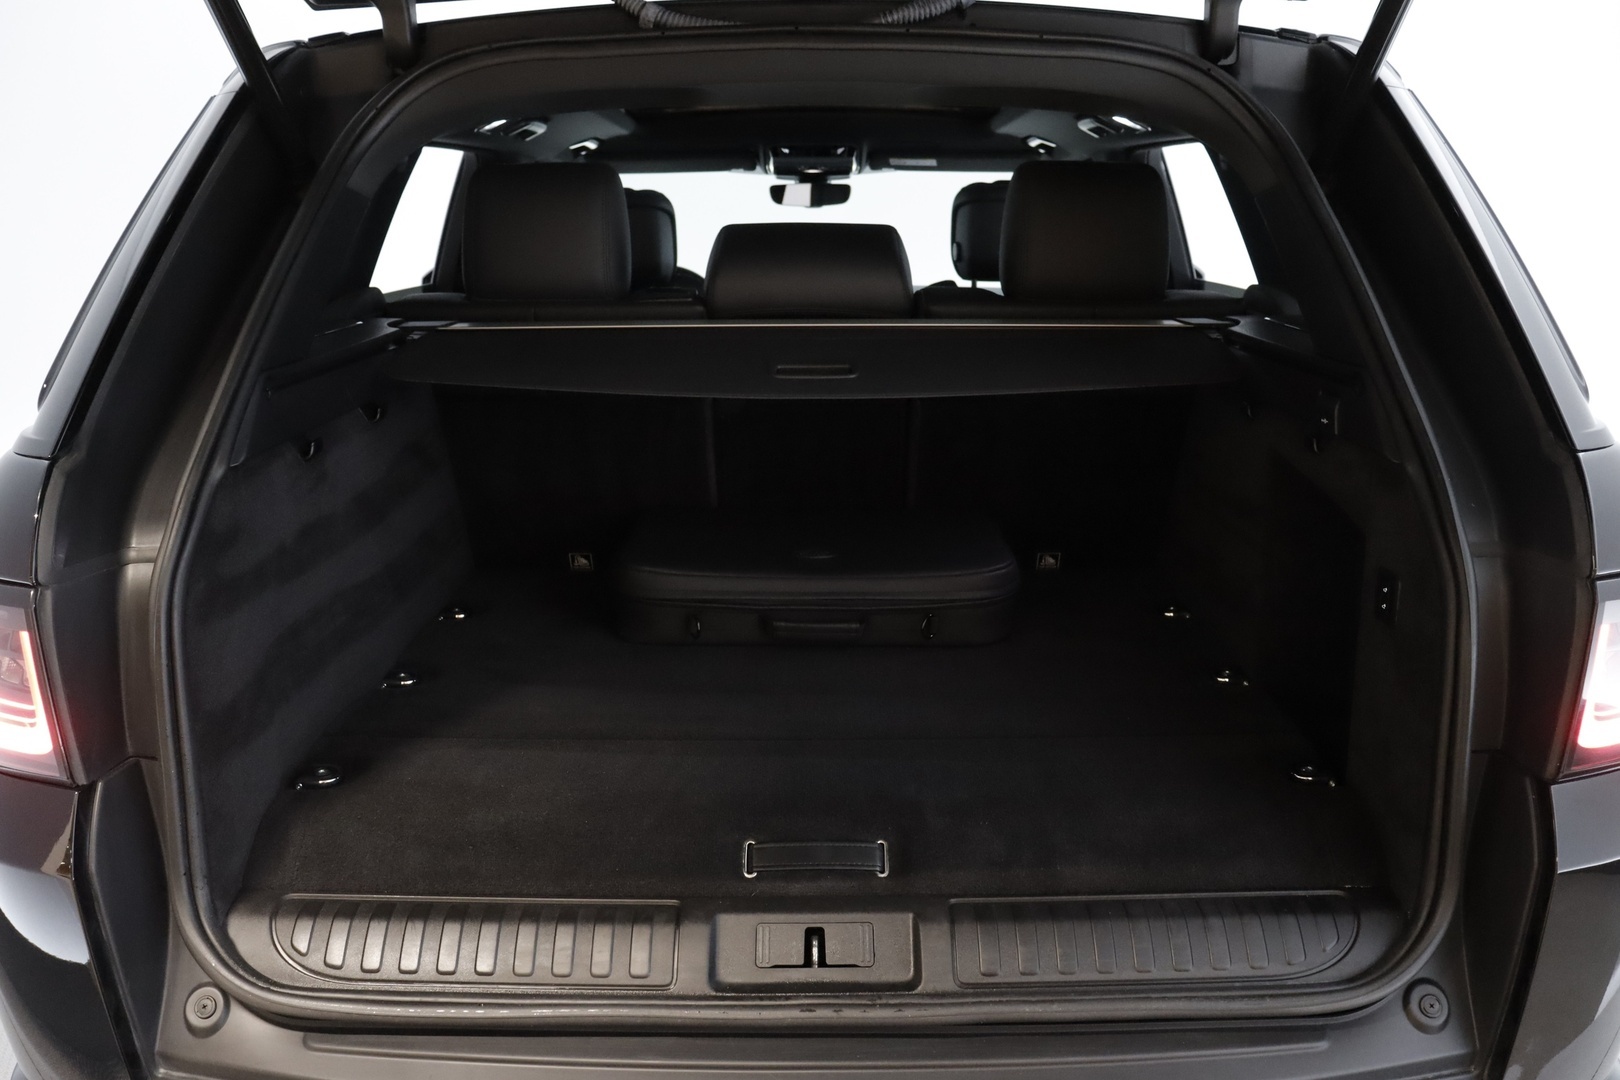 Musta Maastoauto, Land Rover Range Rover Sport – EPX-352